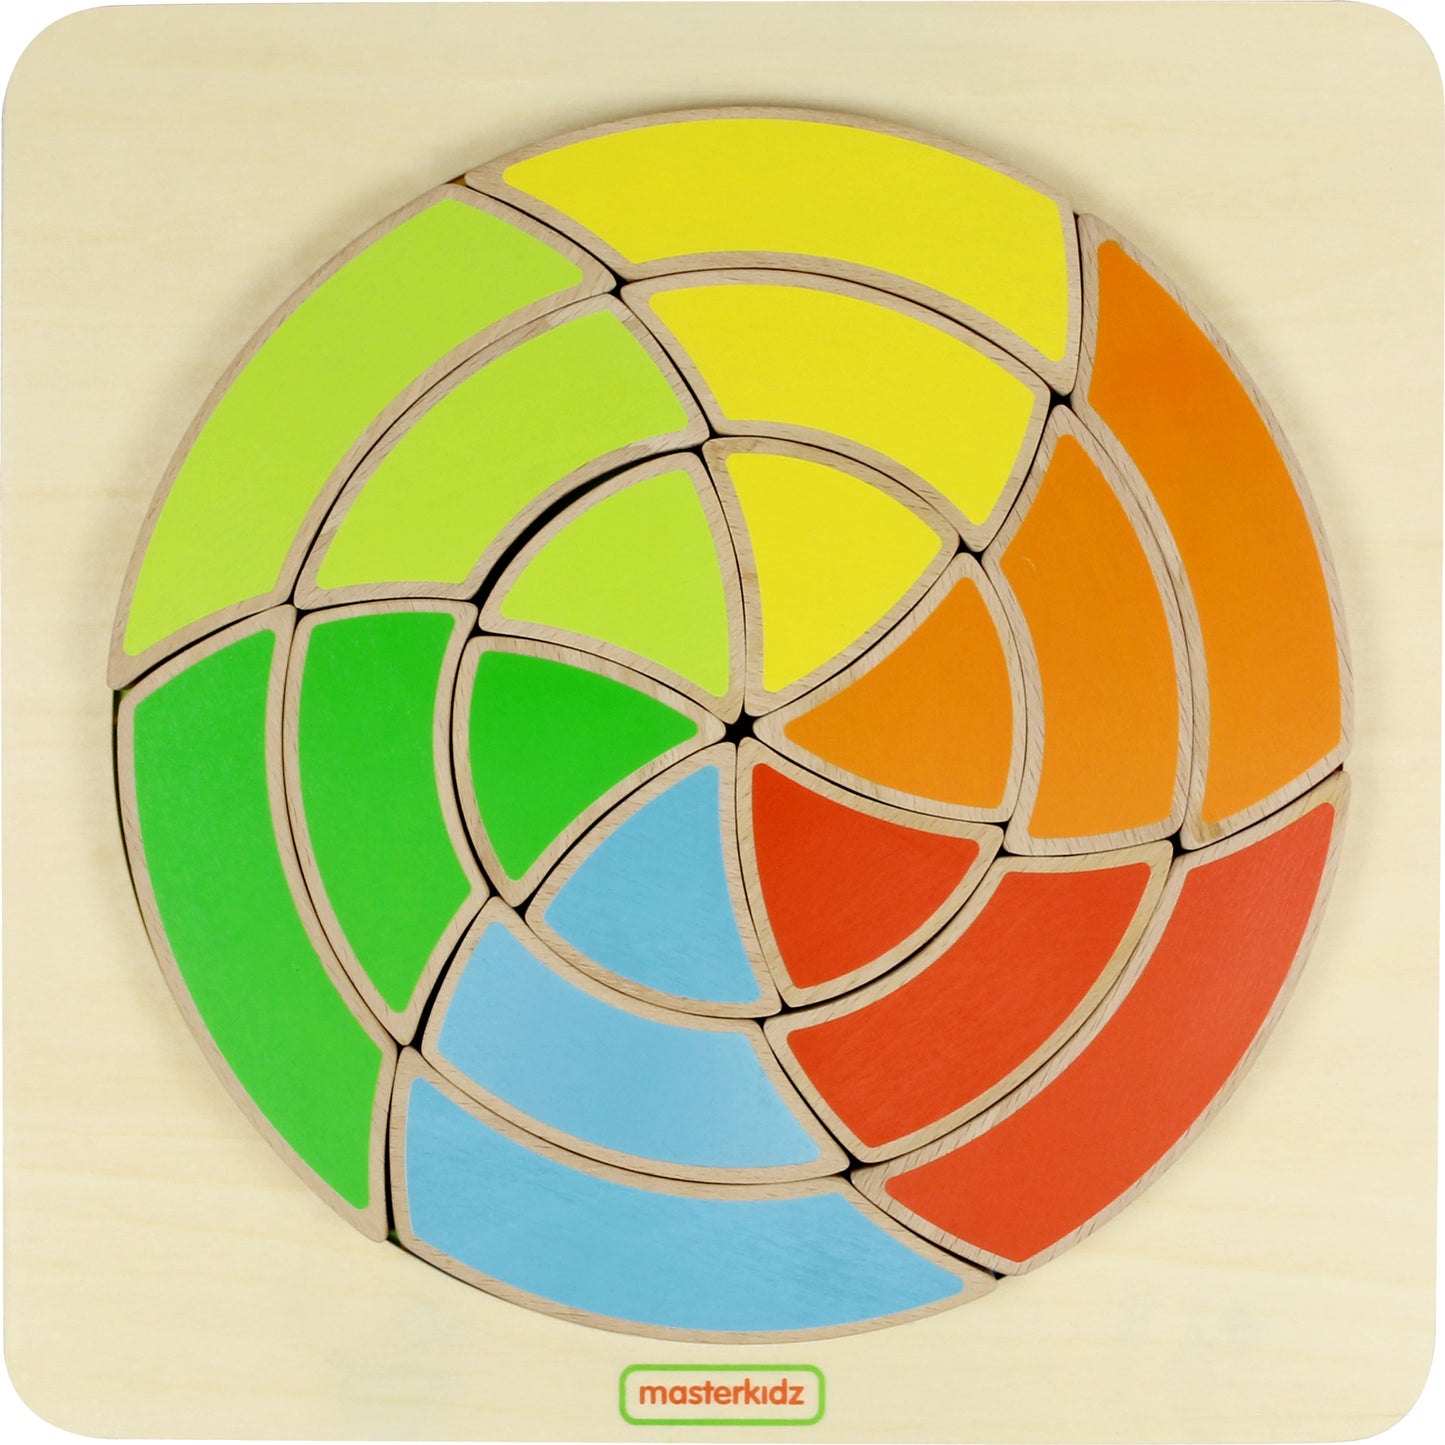 Masterkidz Spiral Wheel Board 螺旋馬賽克拼塊遊戲